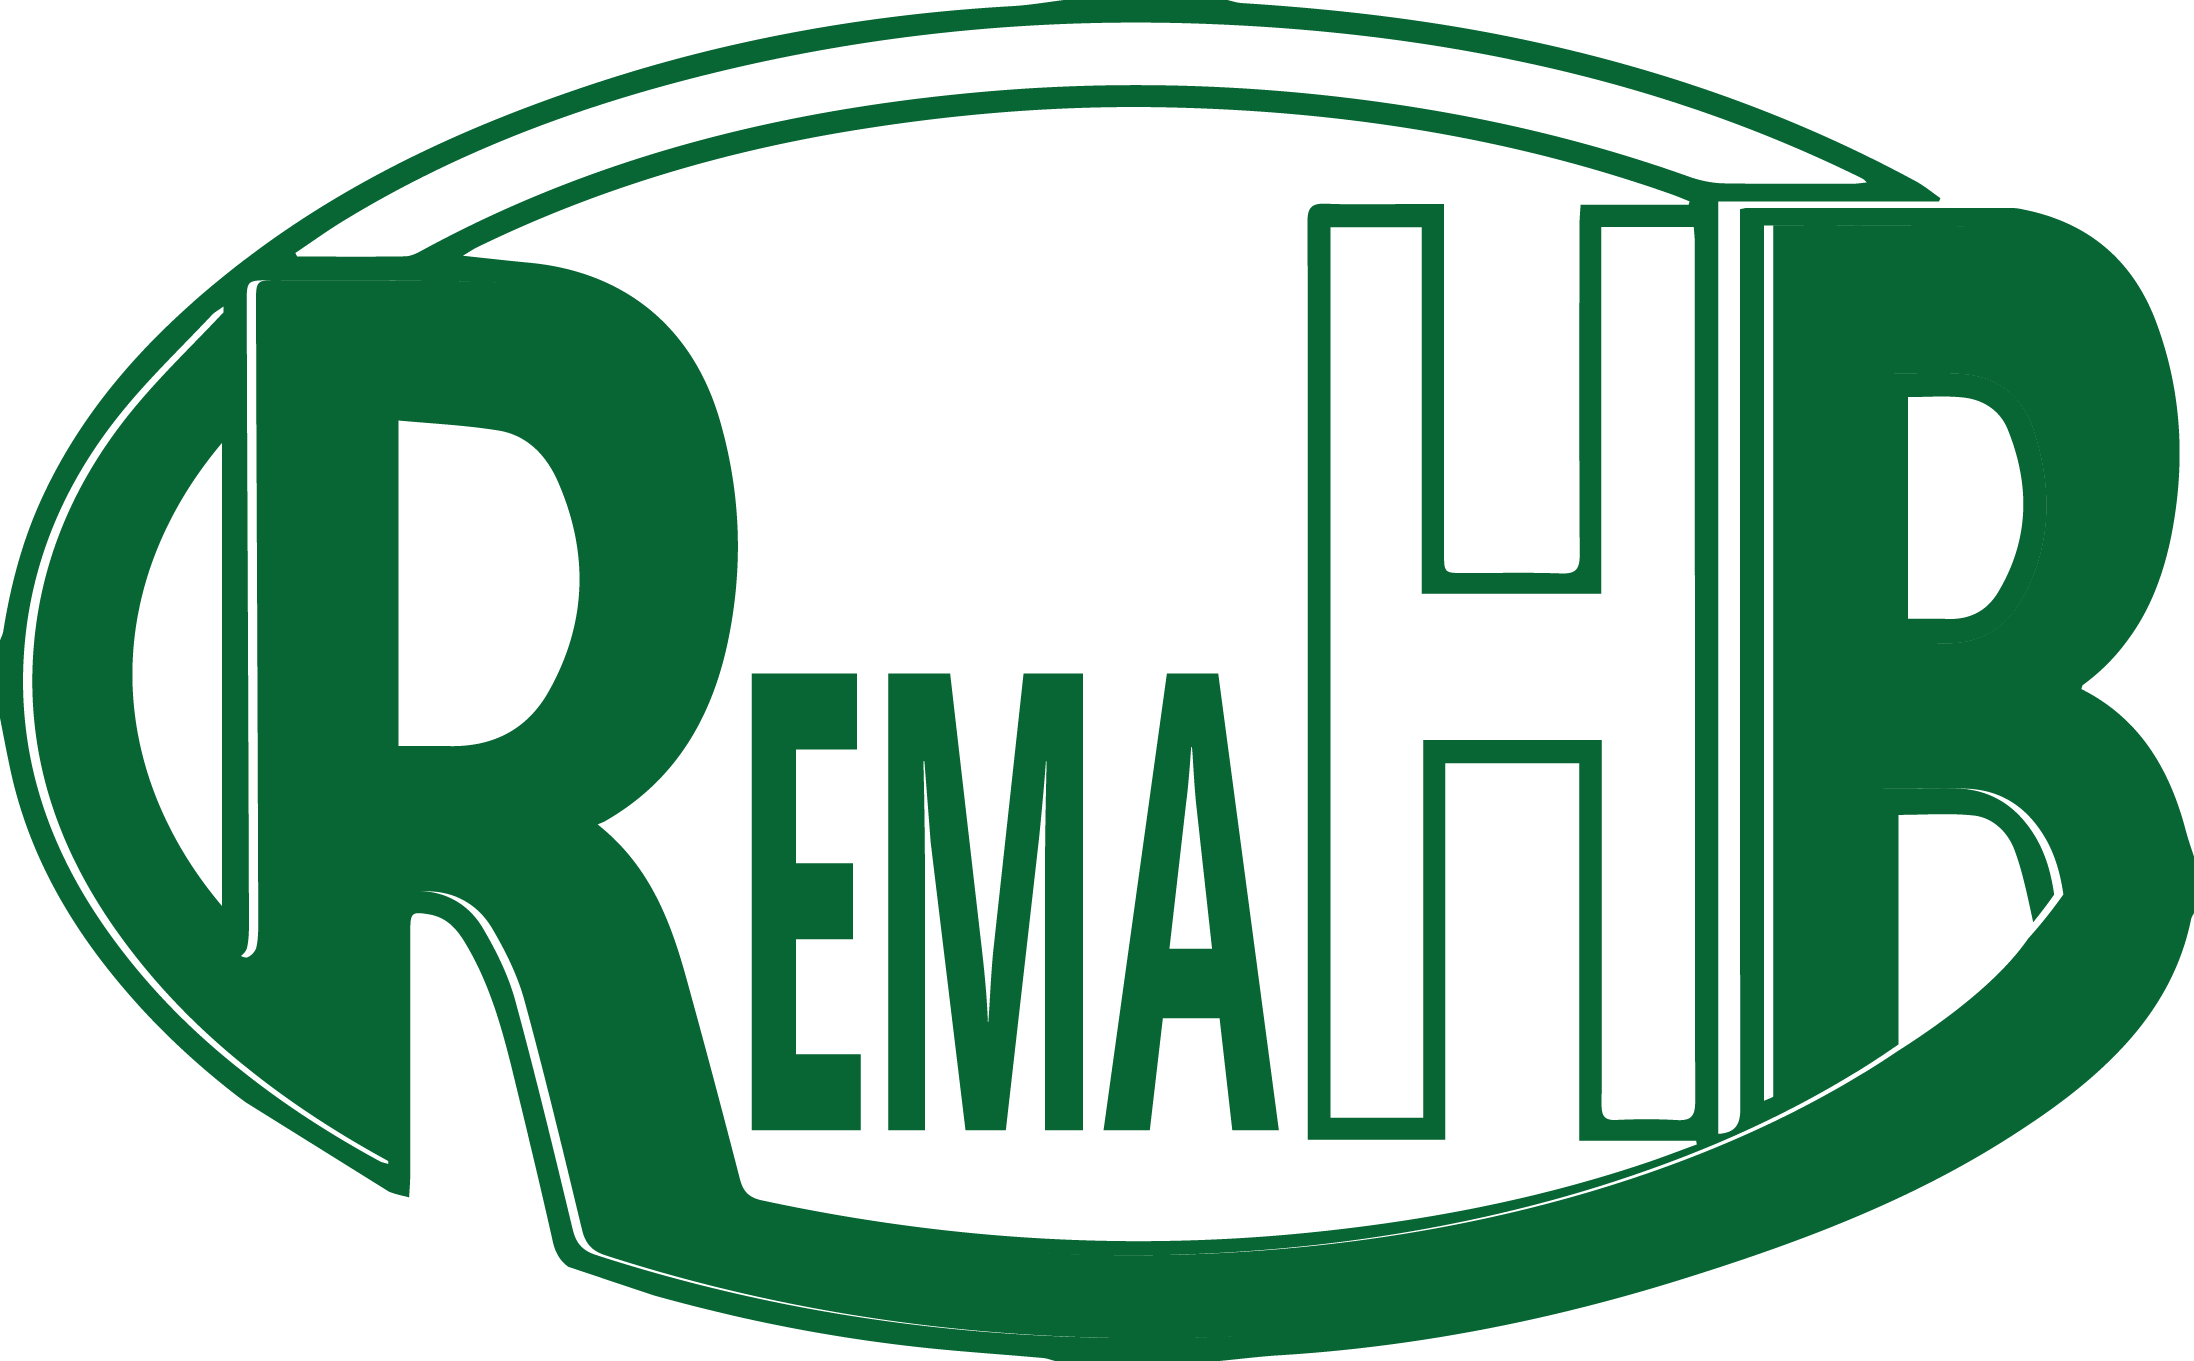 RemaHB